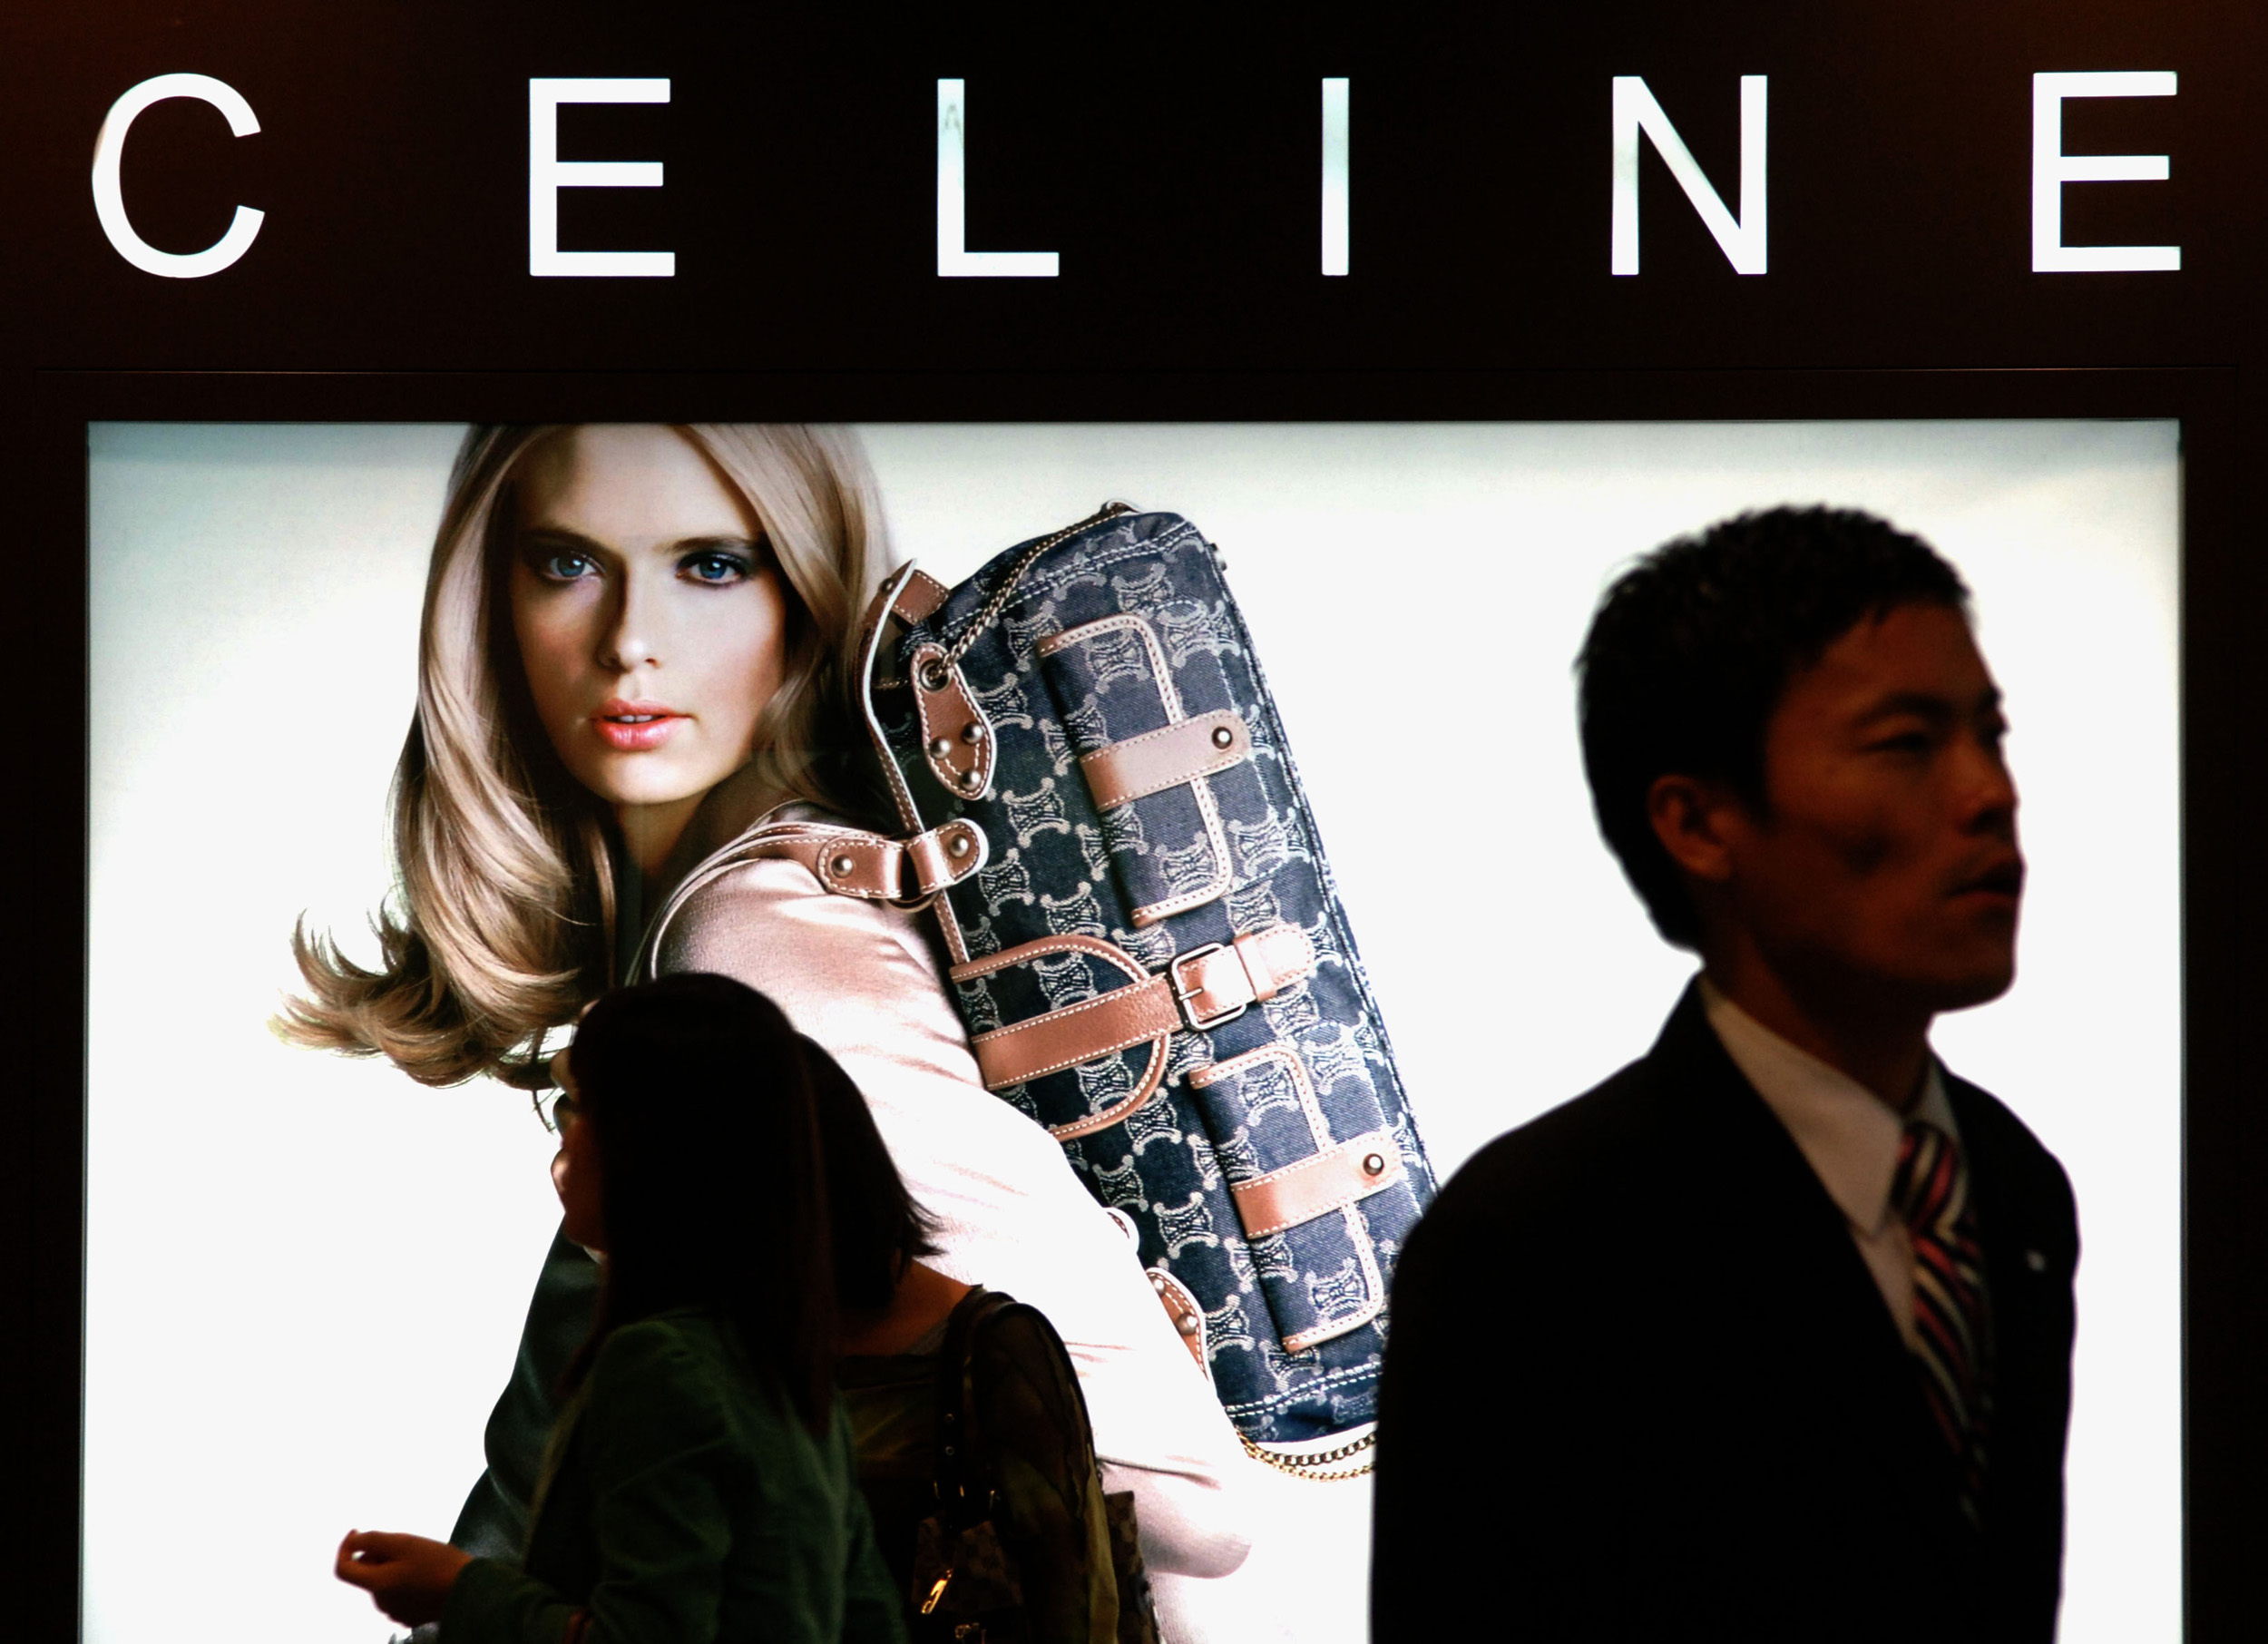 LVMH Names Hedi Slimane as Creative Director of Celine brand - Bloomberg